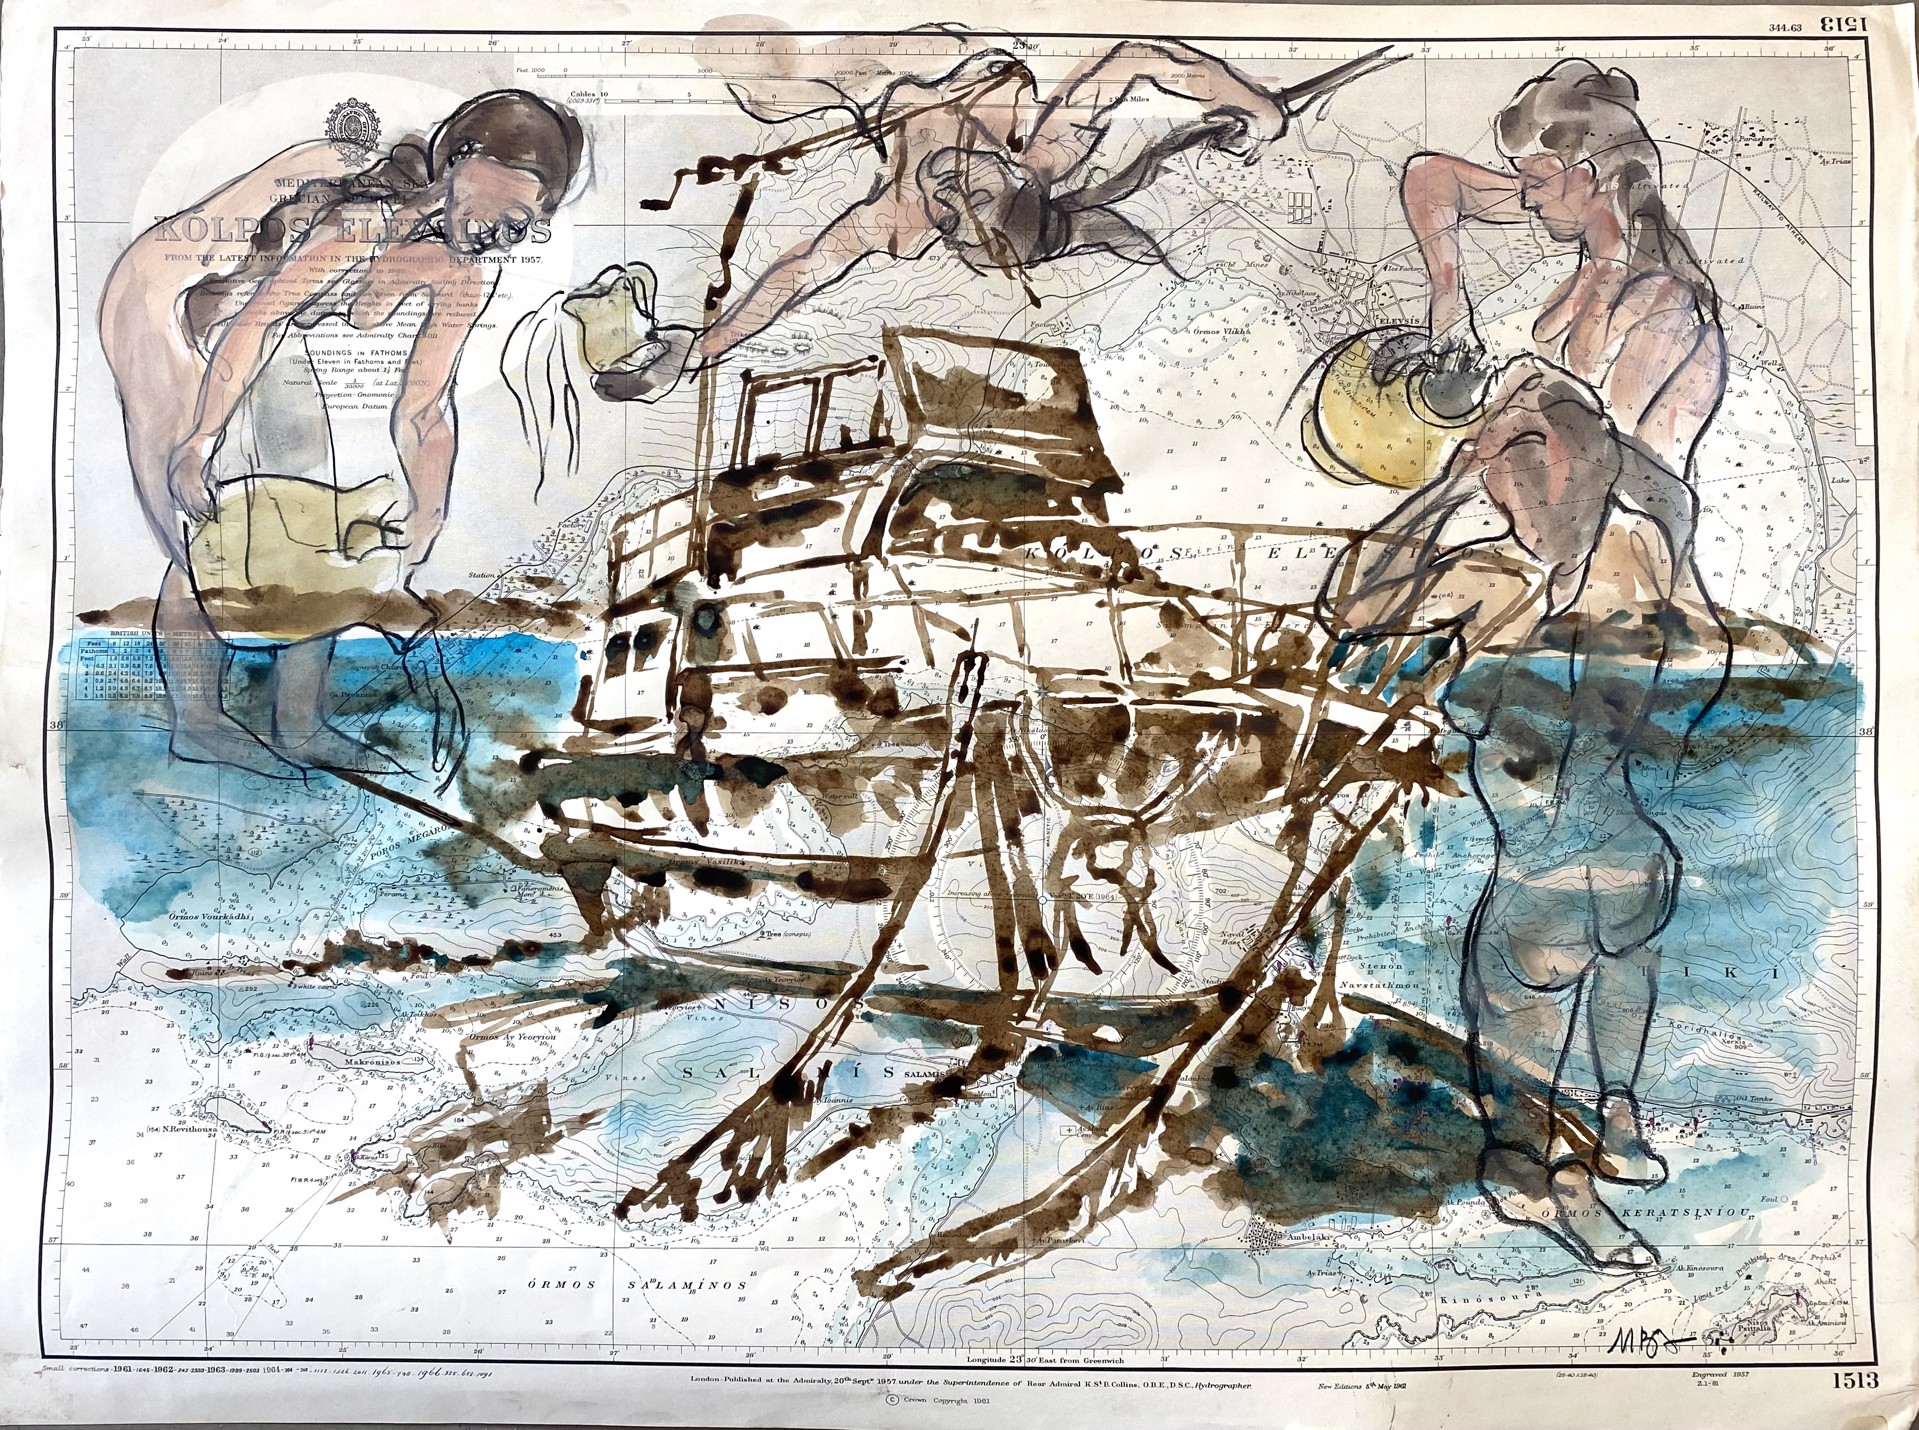 Kolpos Elevsenos - Wrecked Boat and Water Bearers by Mark Adams